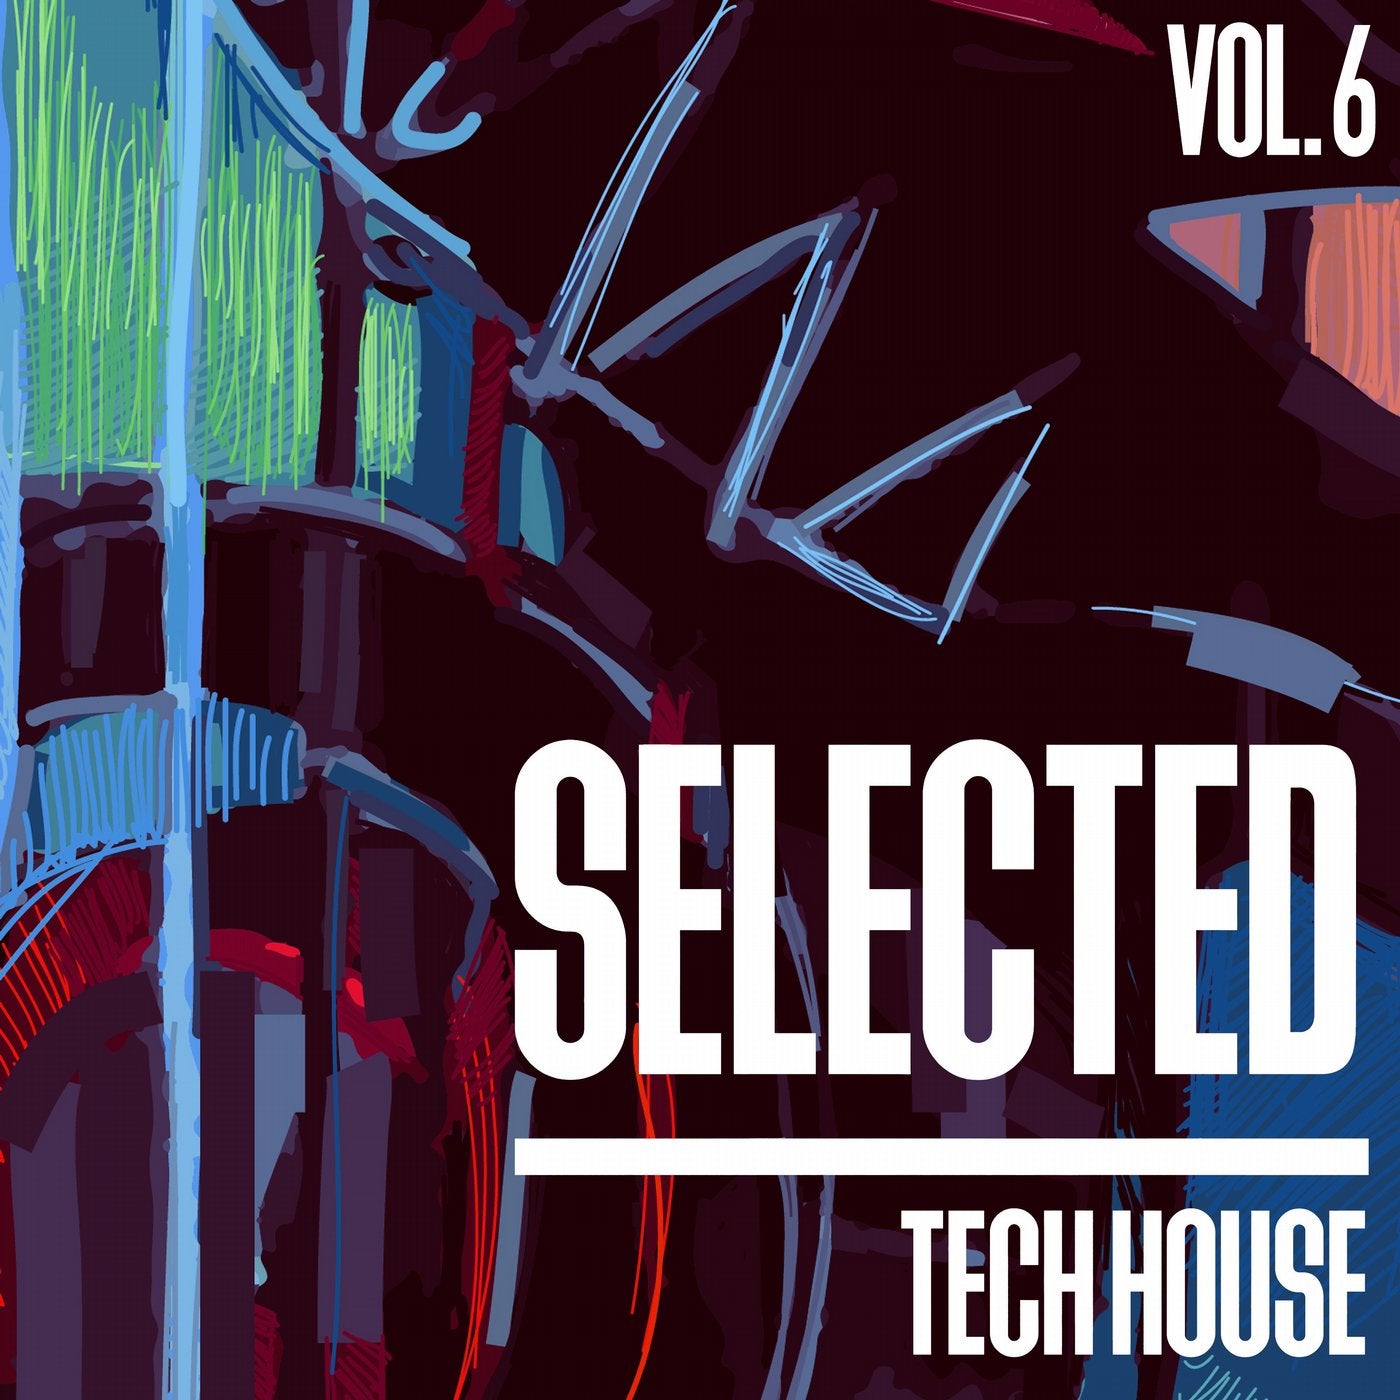 Selected Tech House, Vol. 6